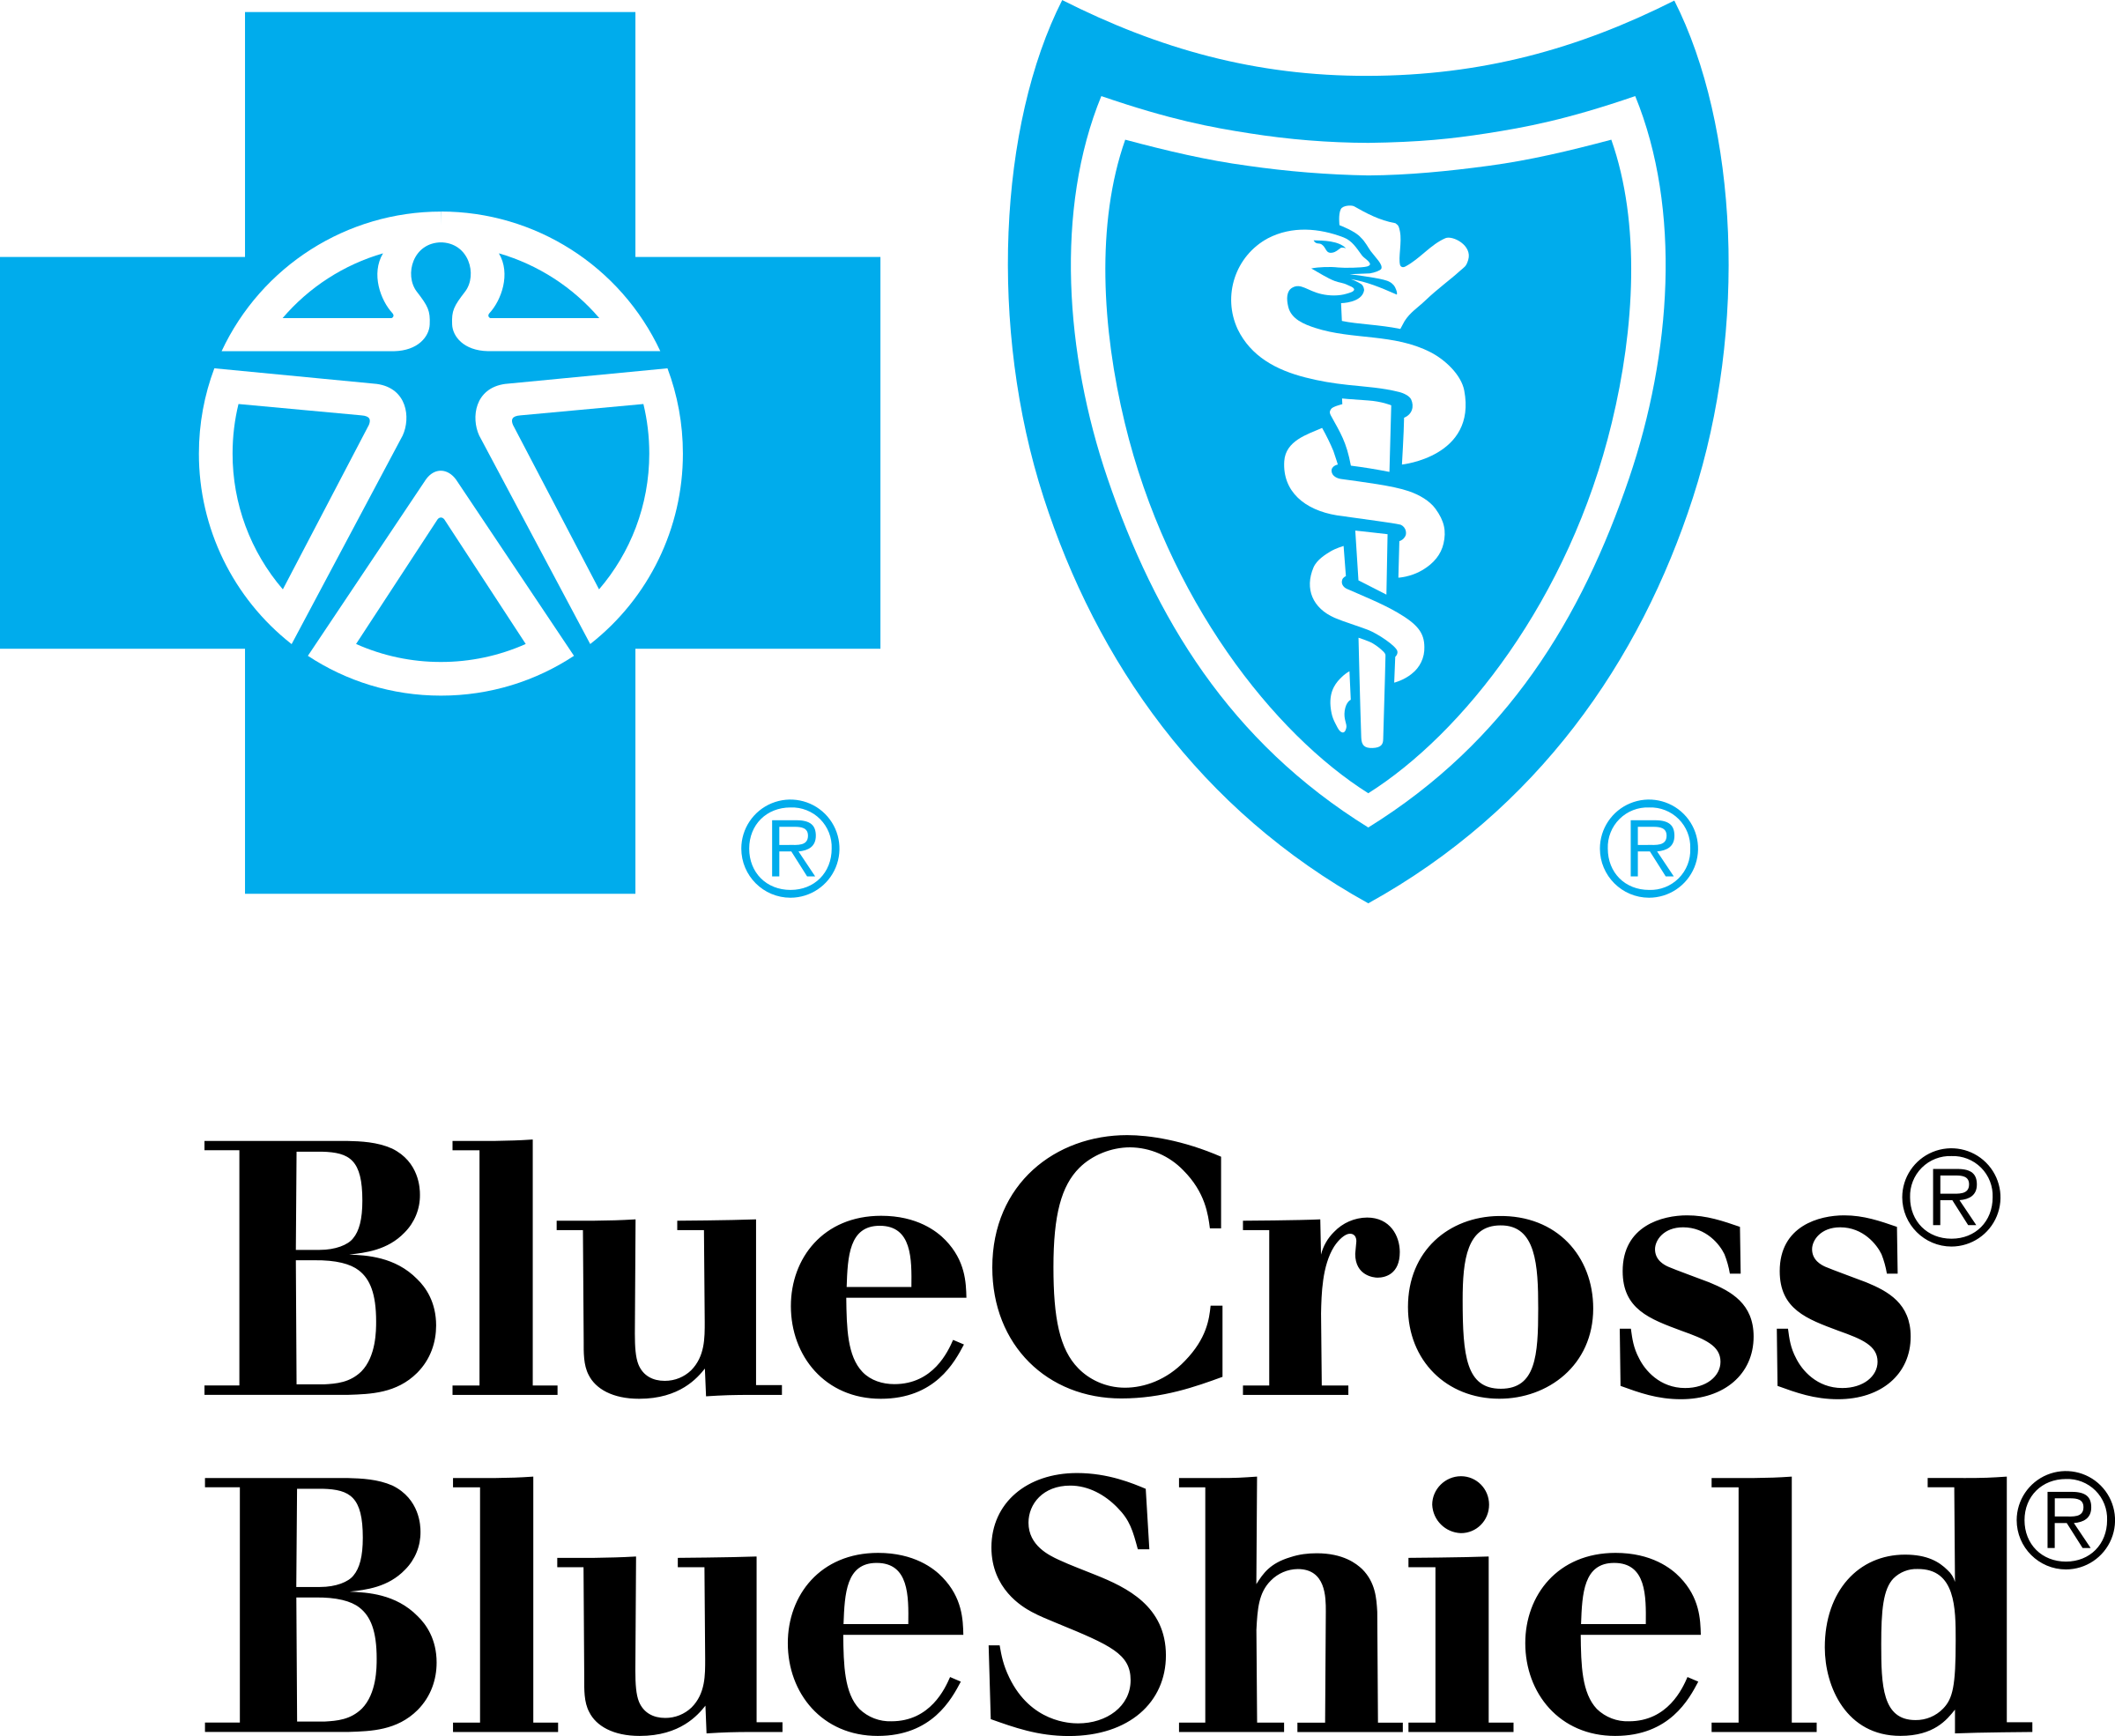 blue-cross-blue-shield-1-logo-png-transparent